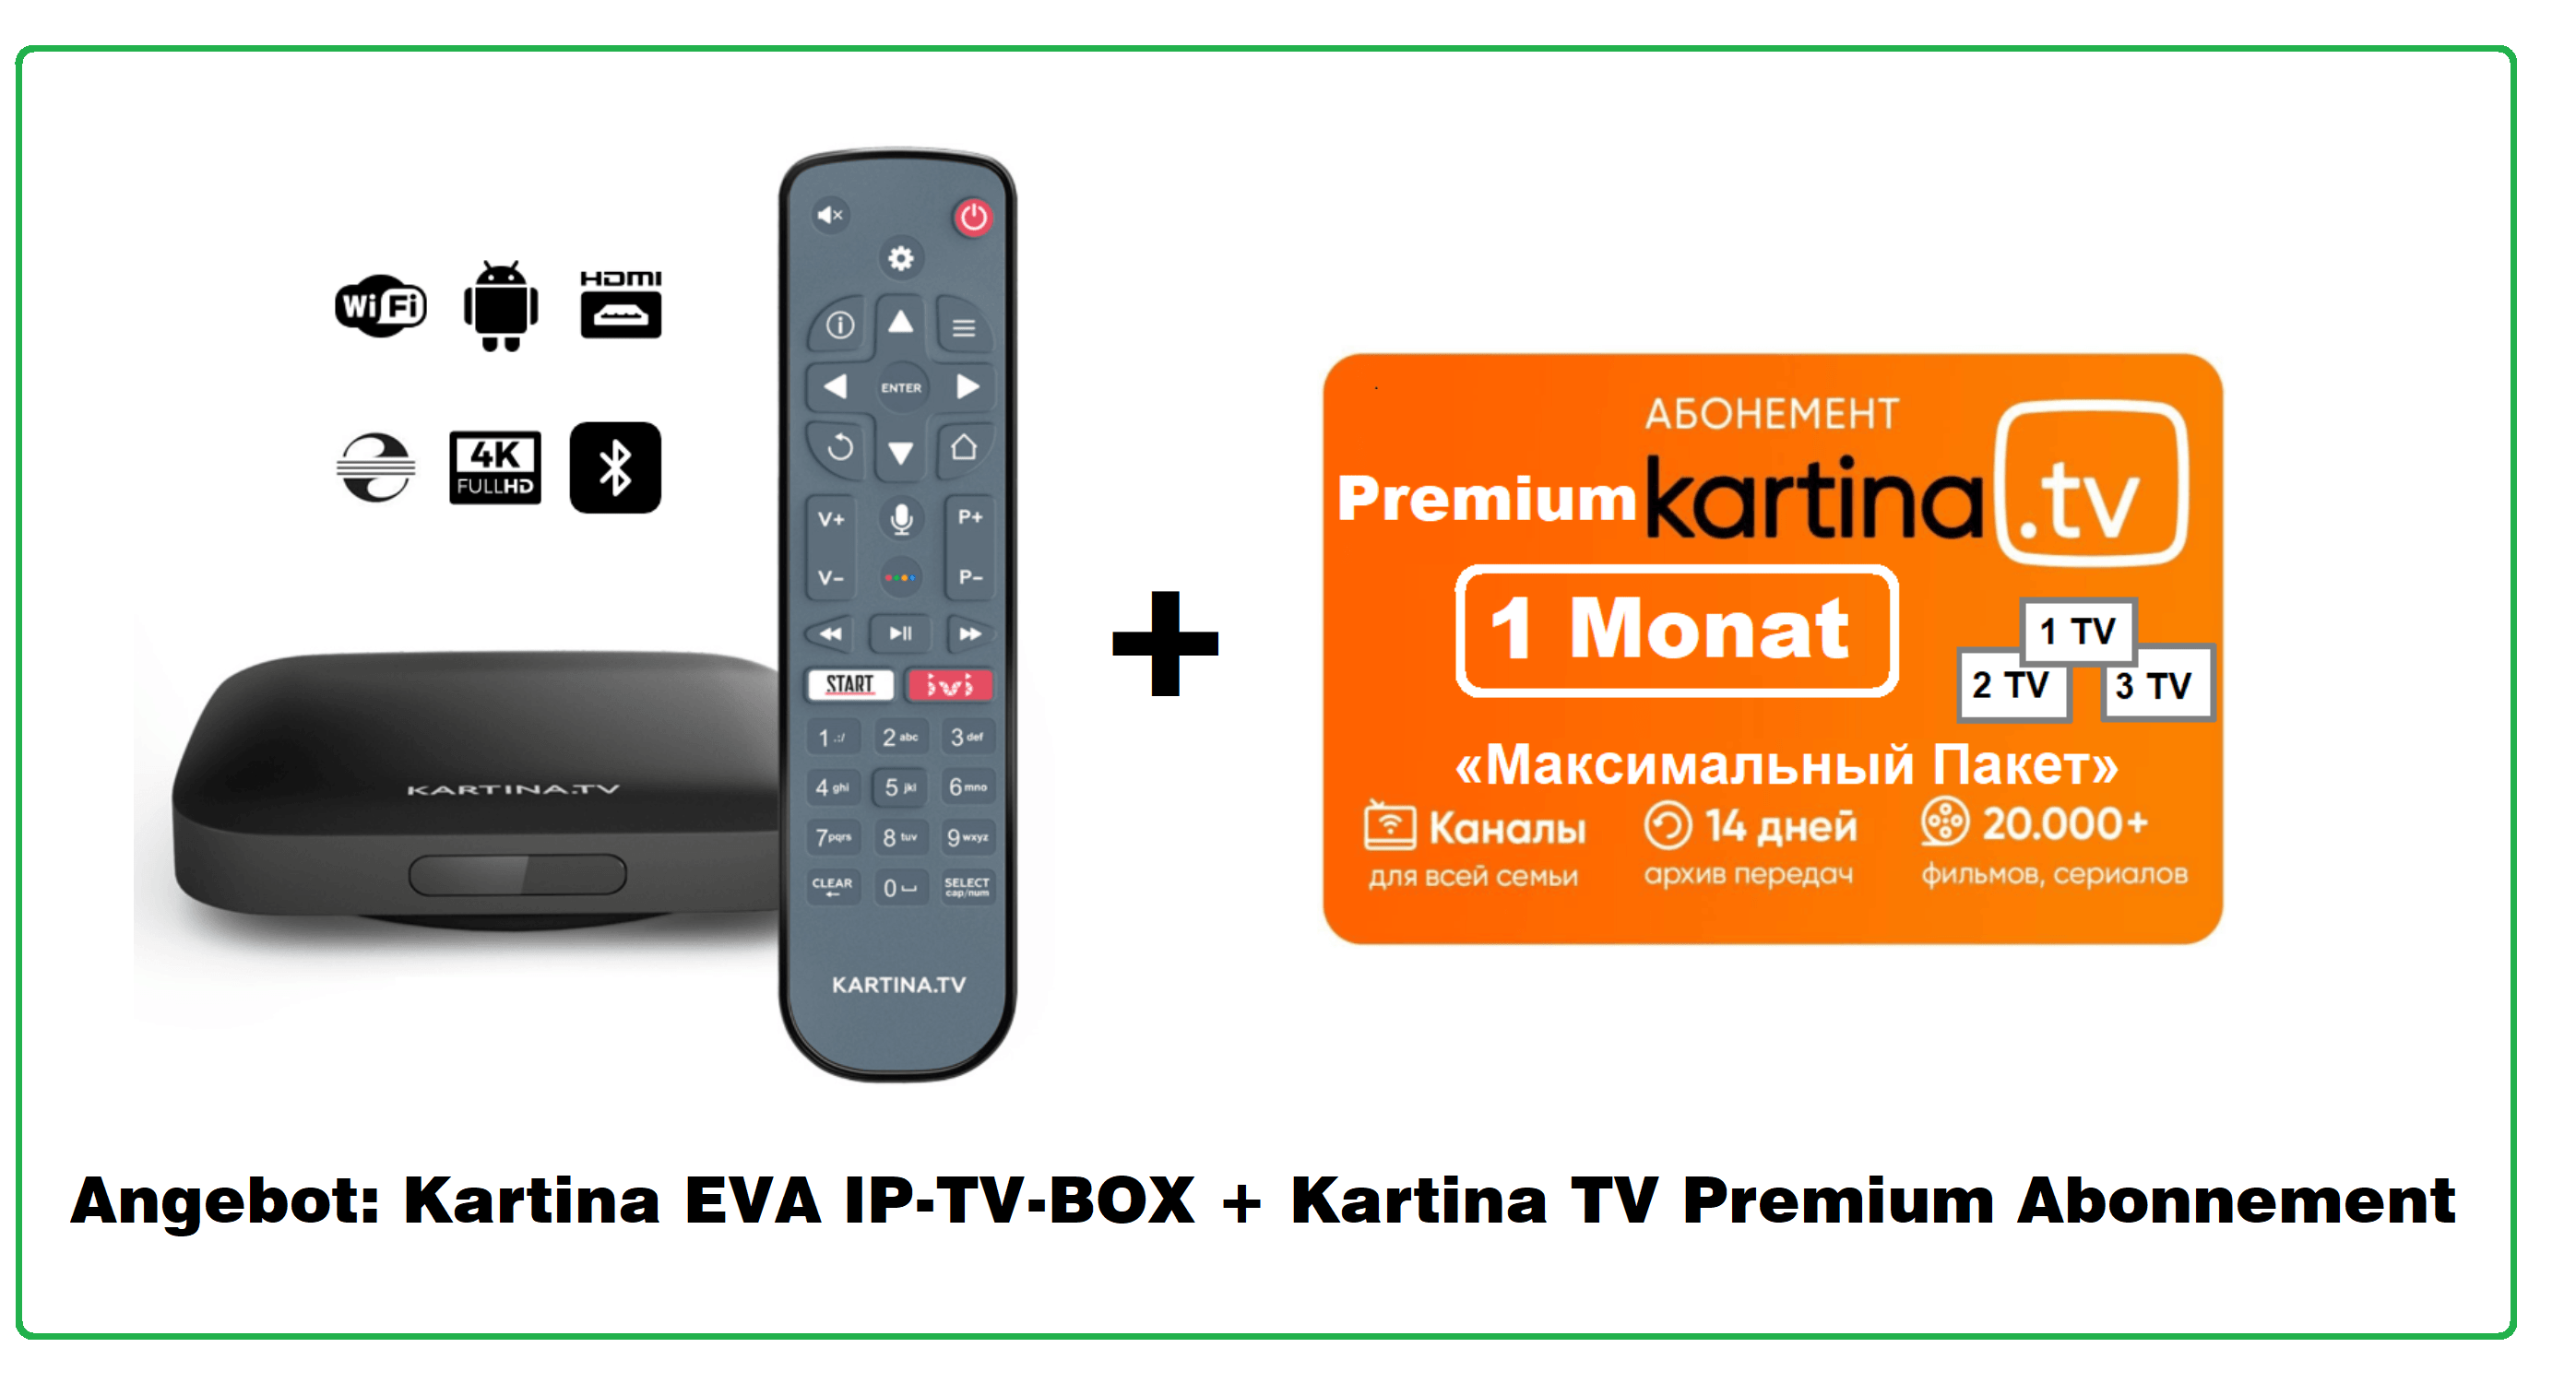 Angebot Kartina Eva Kartina Premium Abonnement 1 Monat